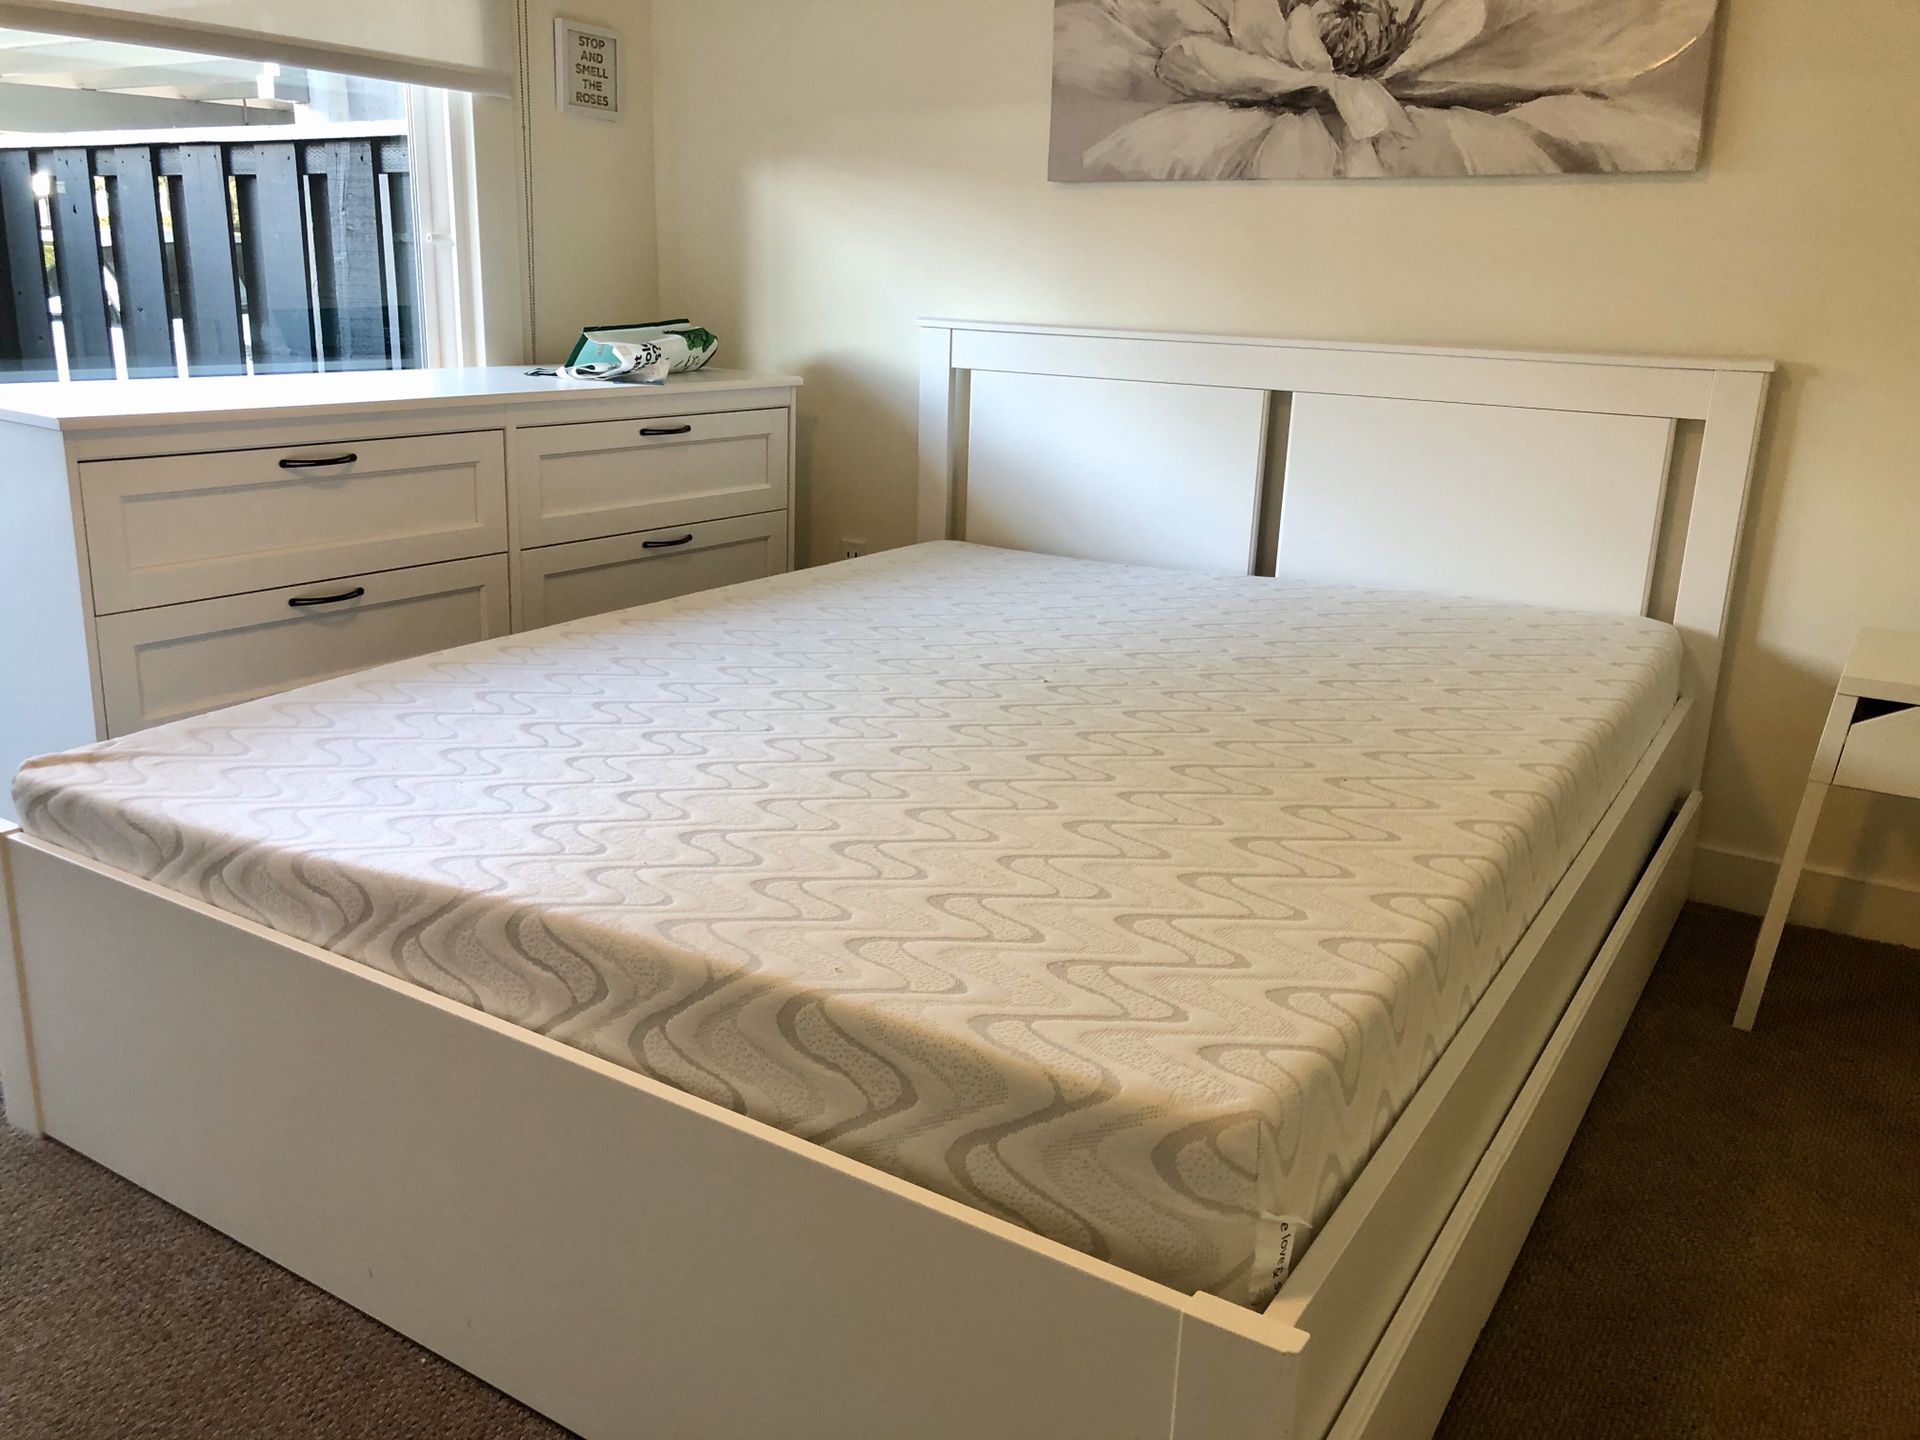 IKEA Queen Bed Set with dresser, organic mattress and nightstand.